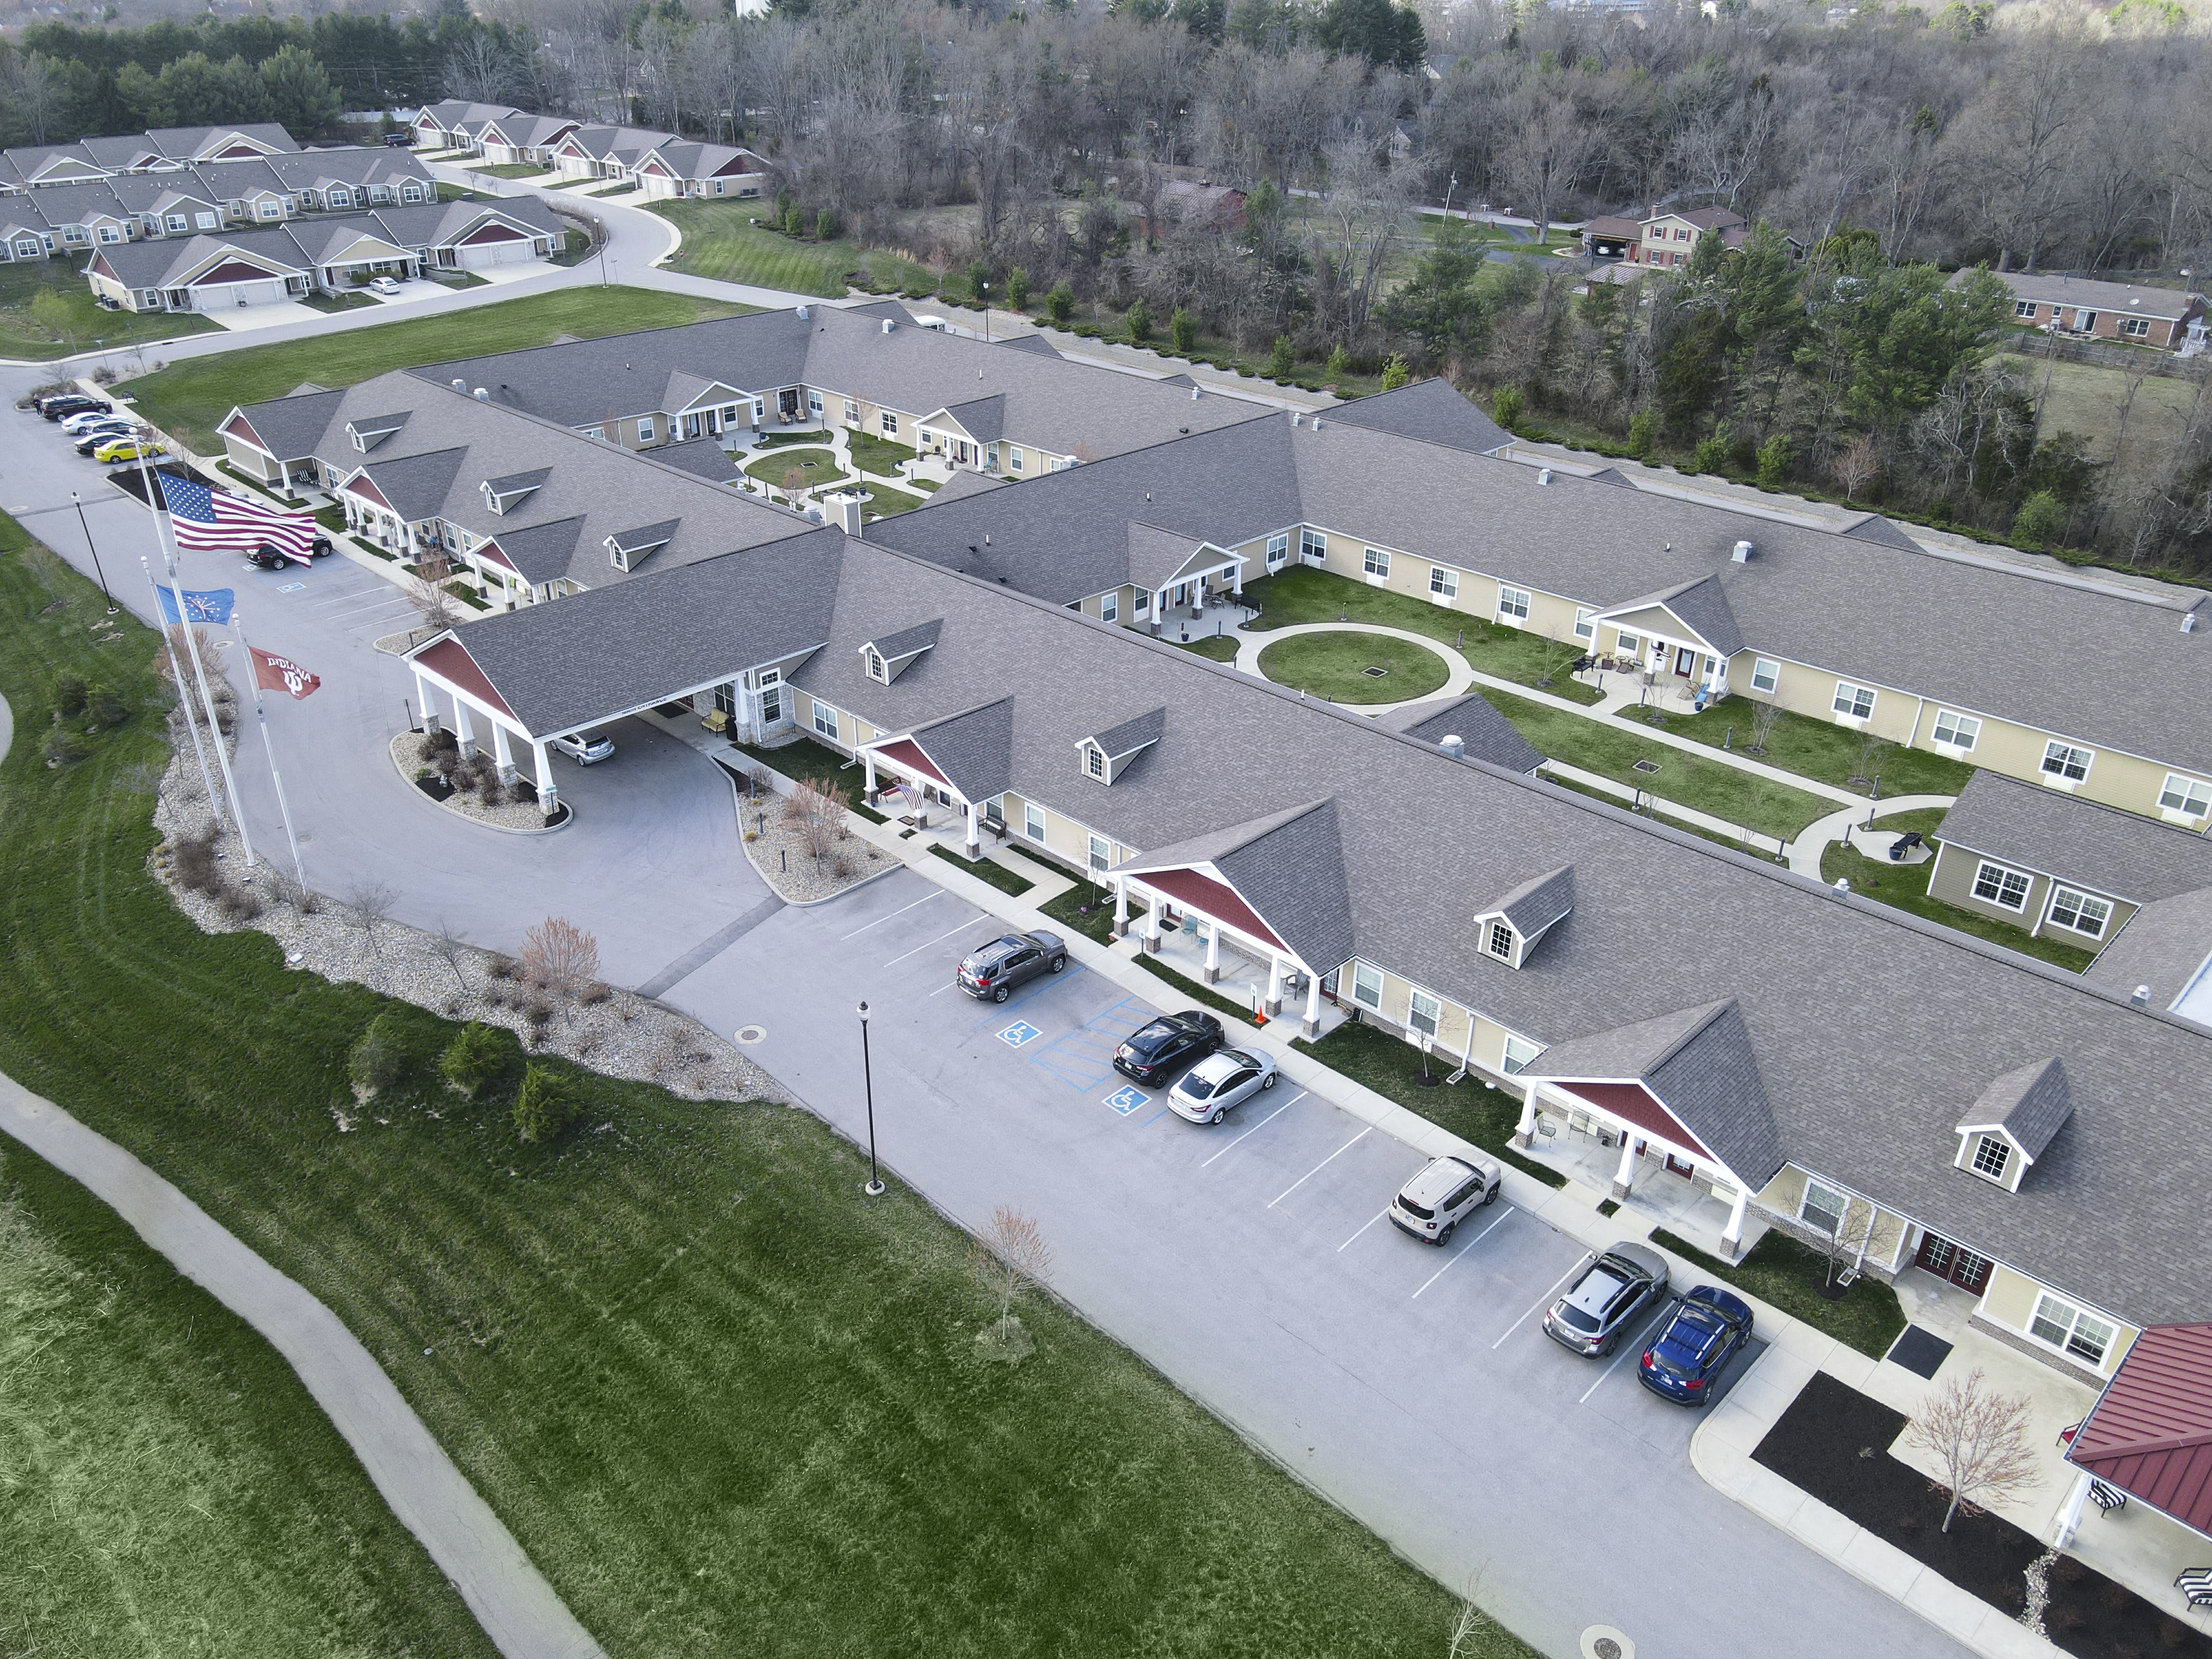 Gentry Park Bloomington aerial view of community